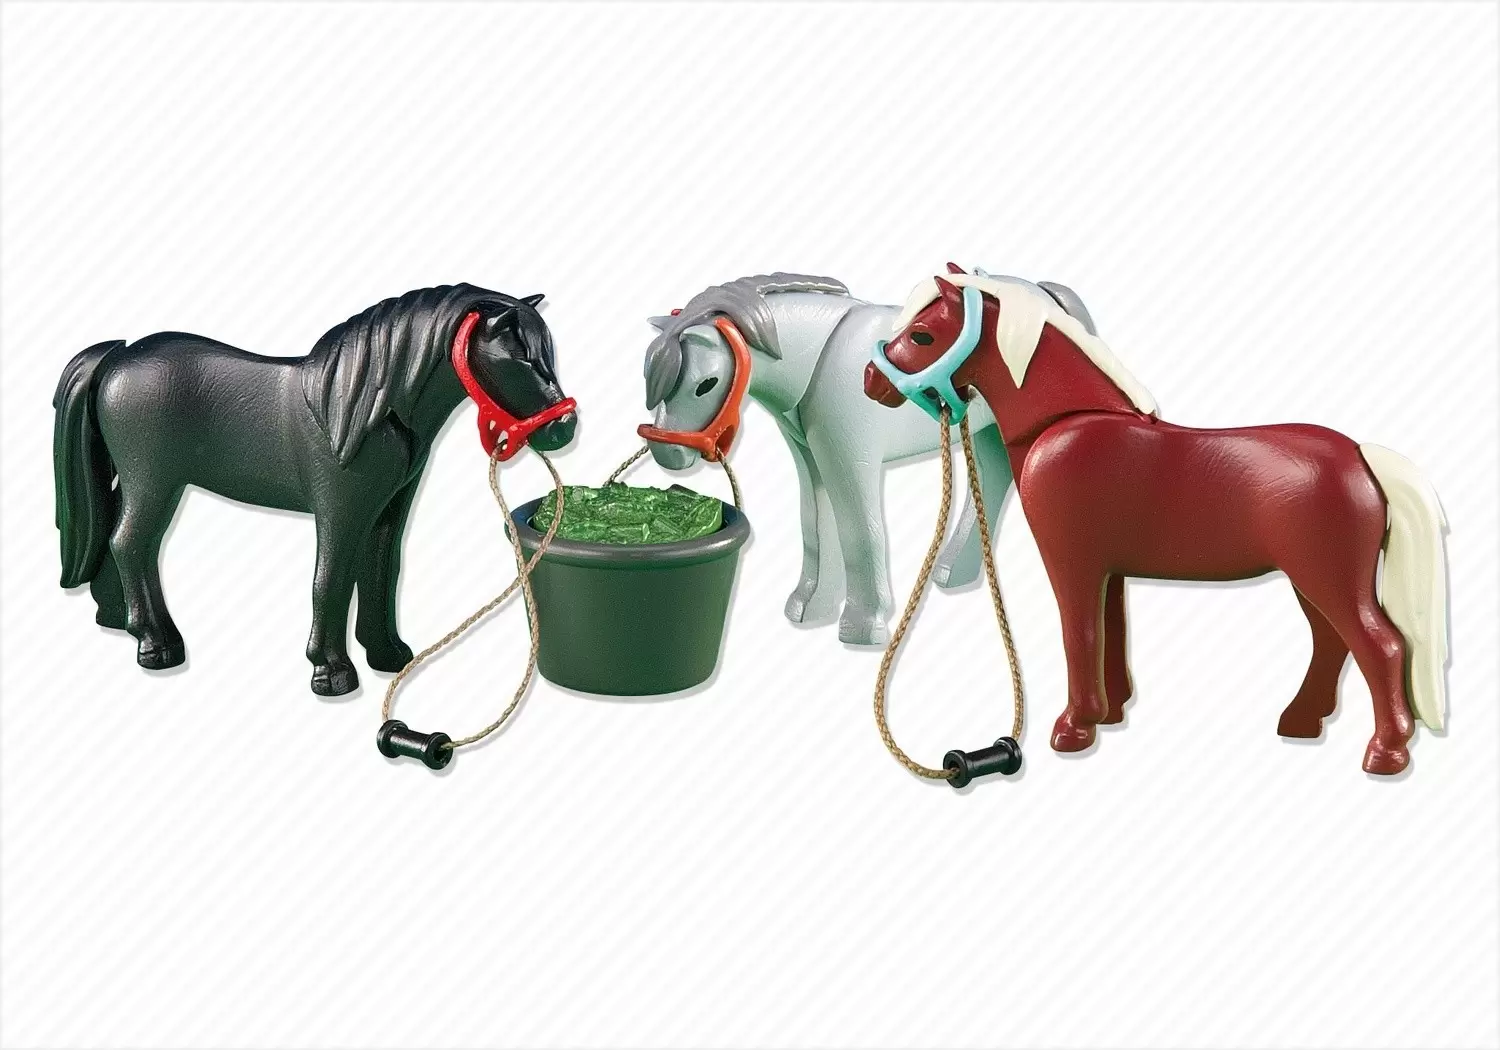 Playmobil Animaux - 3 poneys avec mangeoire